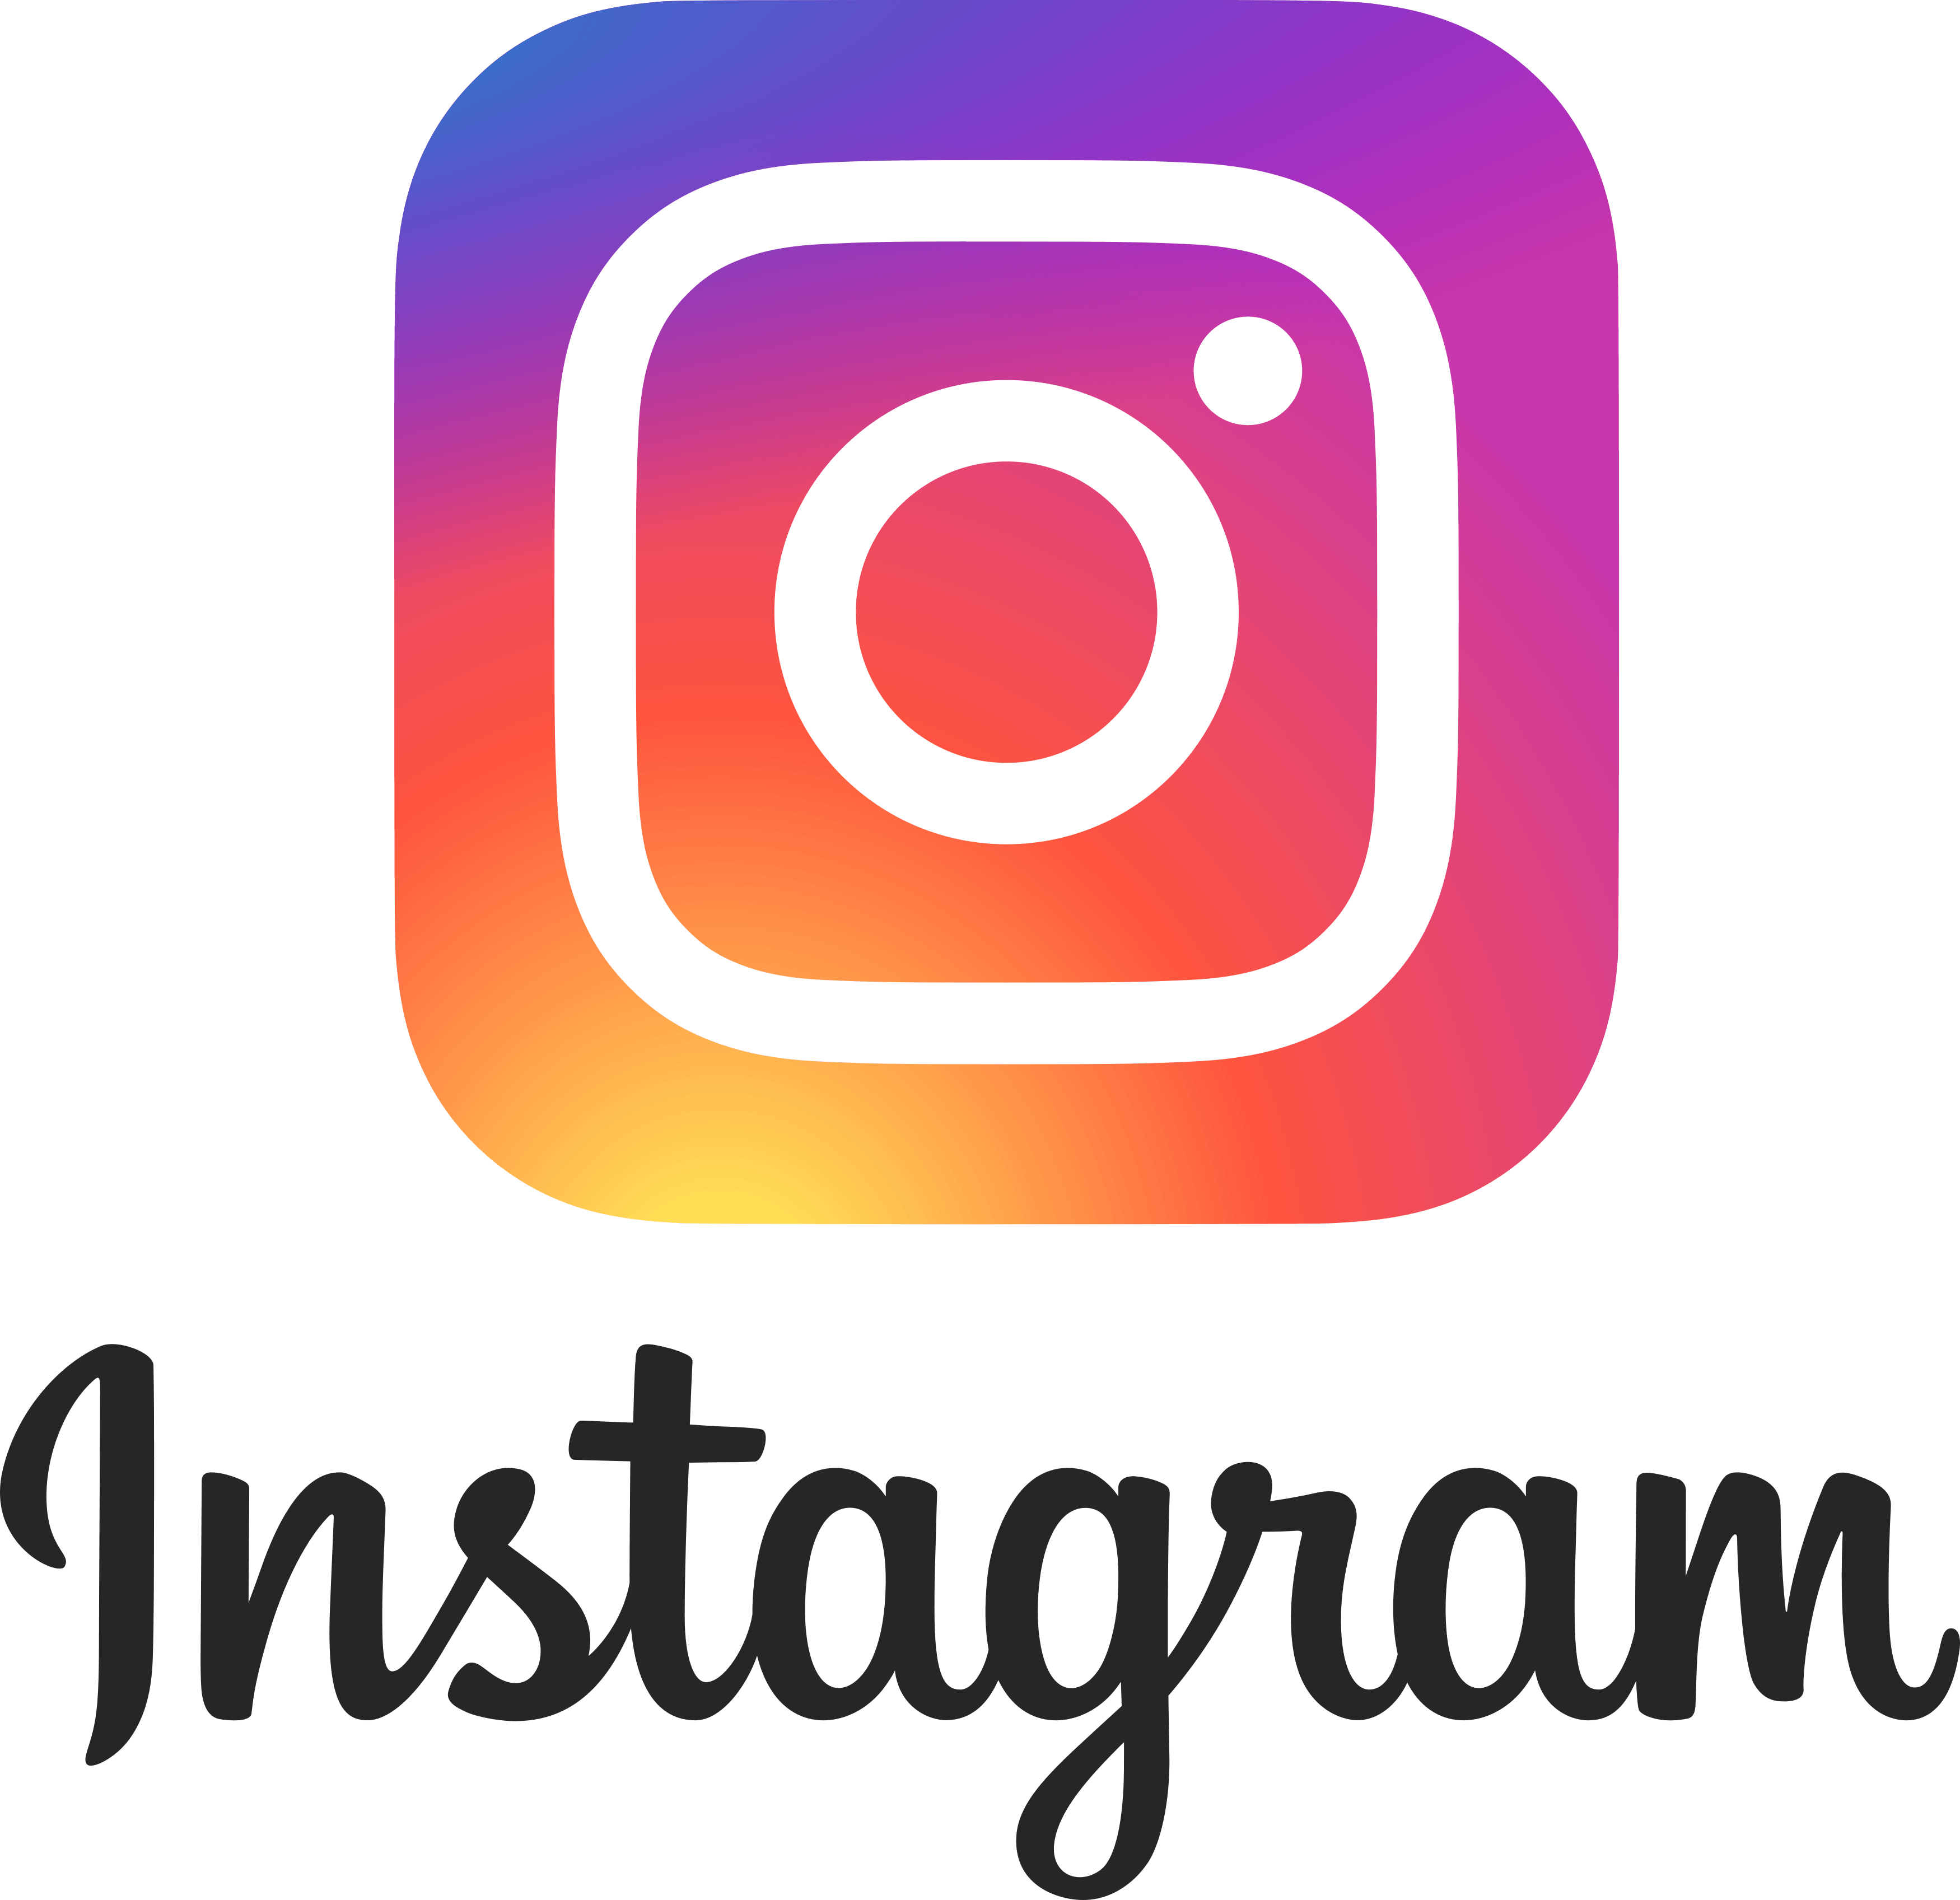 Big Instagram Logo - Instagram Tech Support 1855-441-4470 | Instagram Customer Service Number